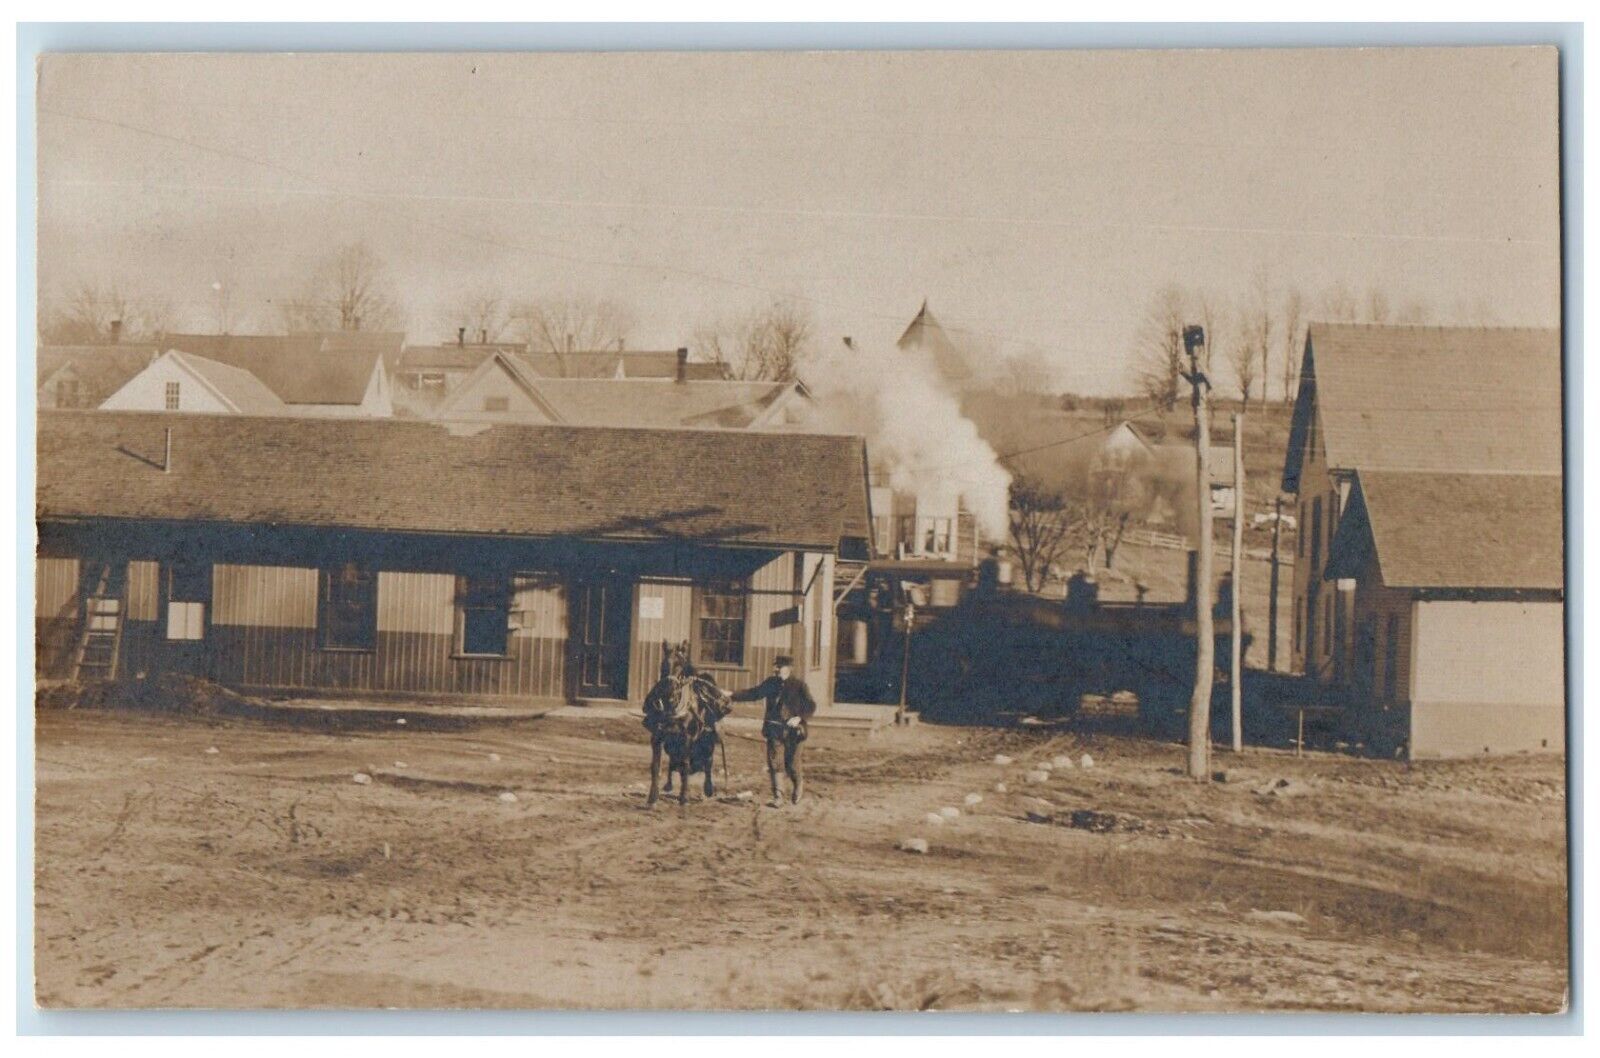 c1905 Railroad Station Depot Locomotive Train Horse RPPC Photo Postcard